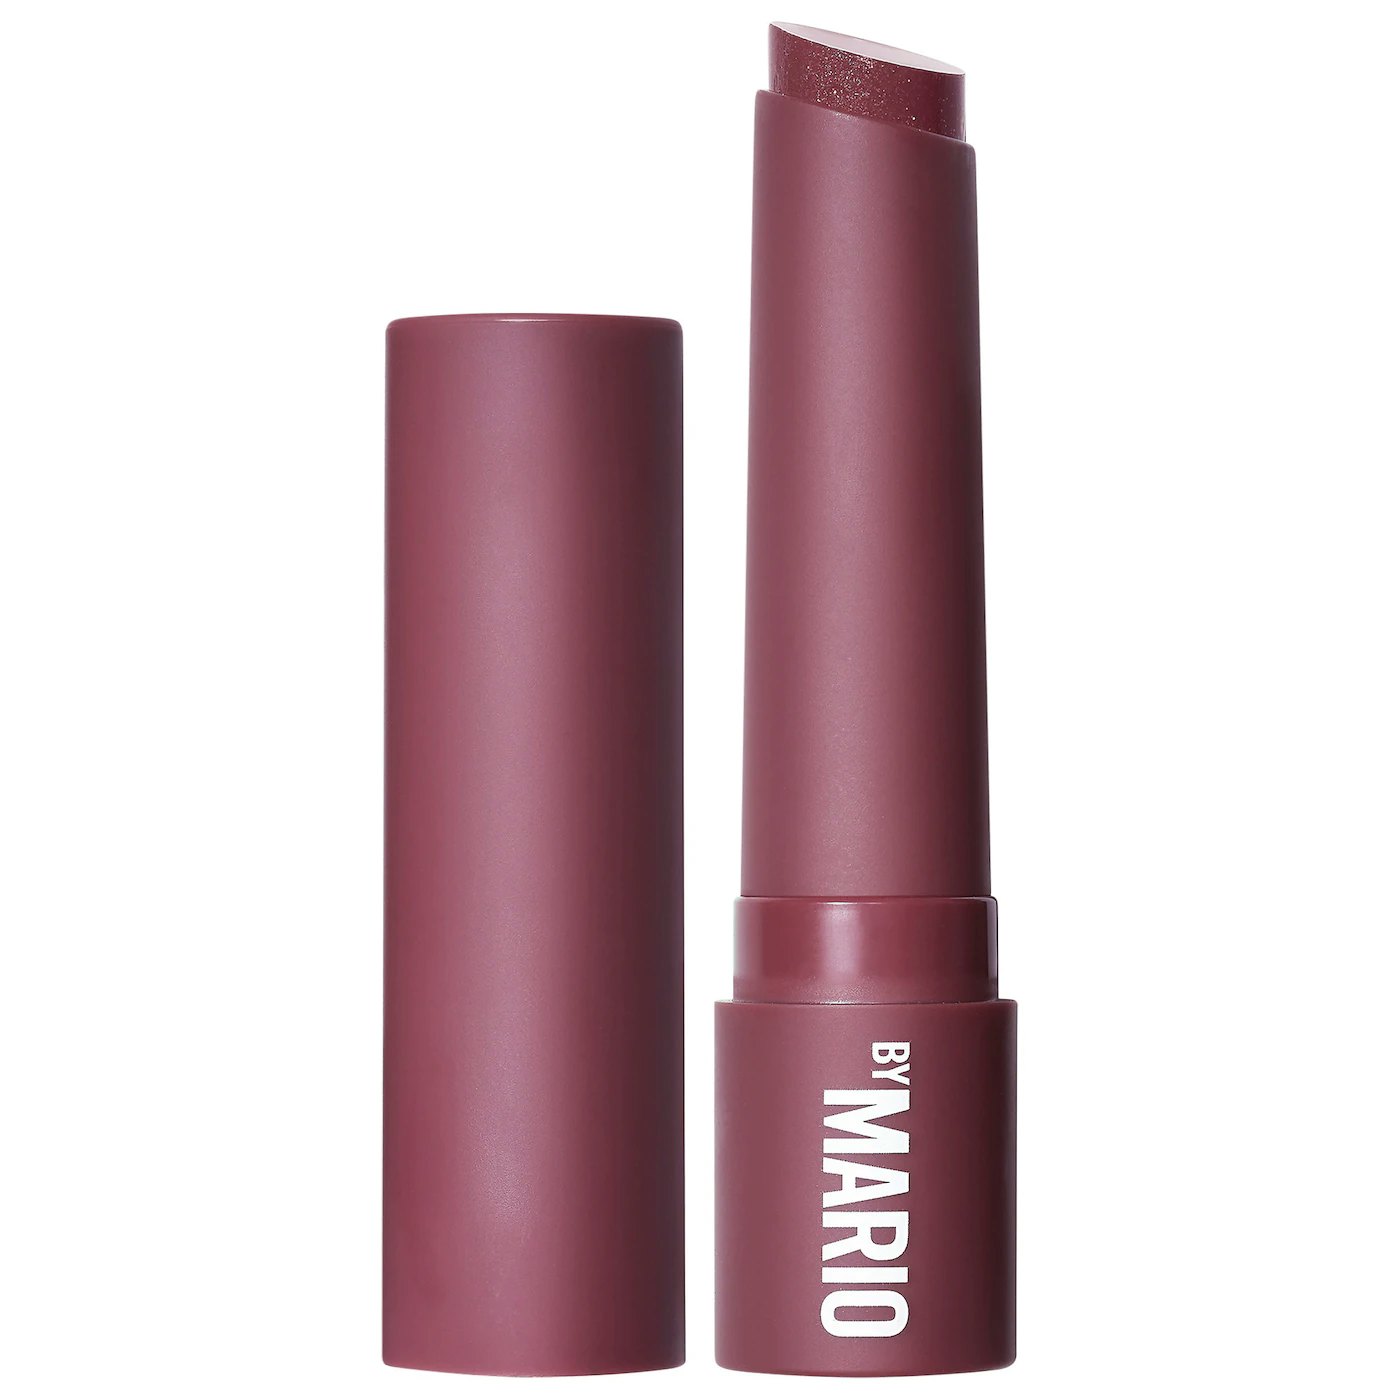 Plum Lipstick Is This Season's Hottest Makeup Trend